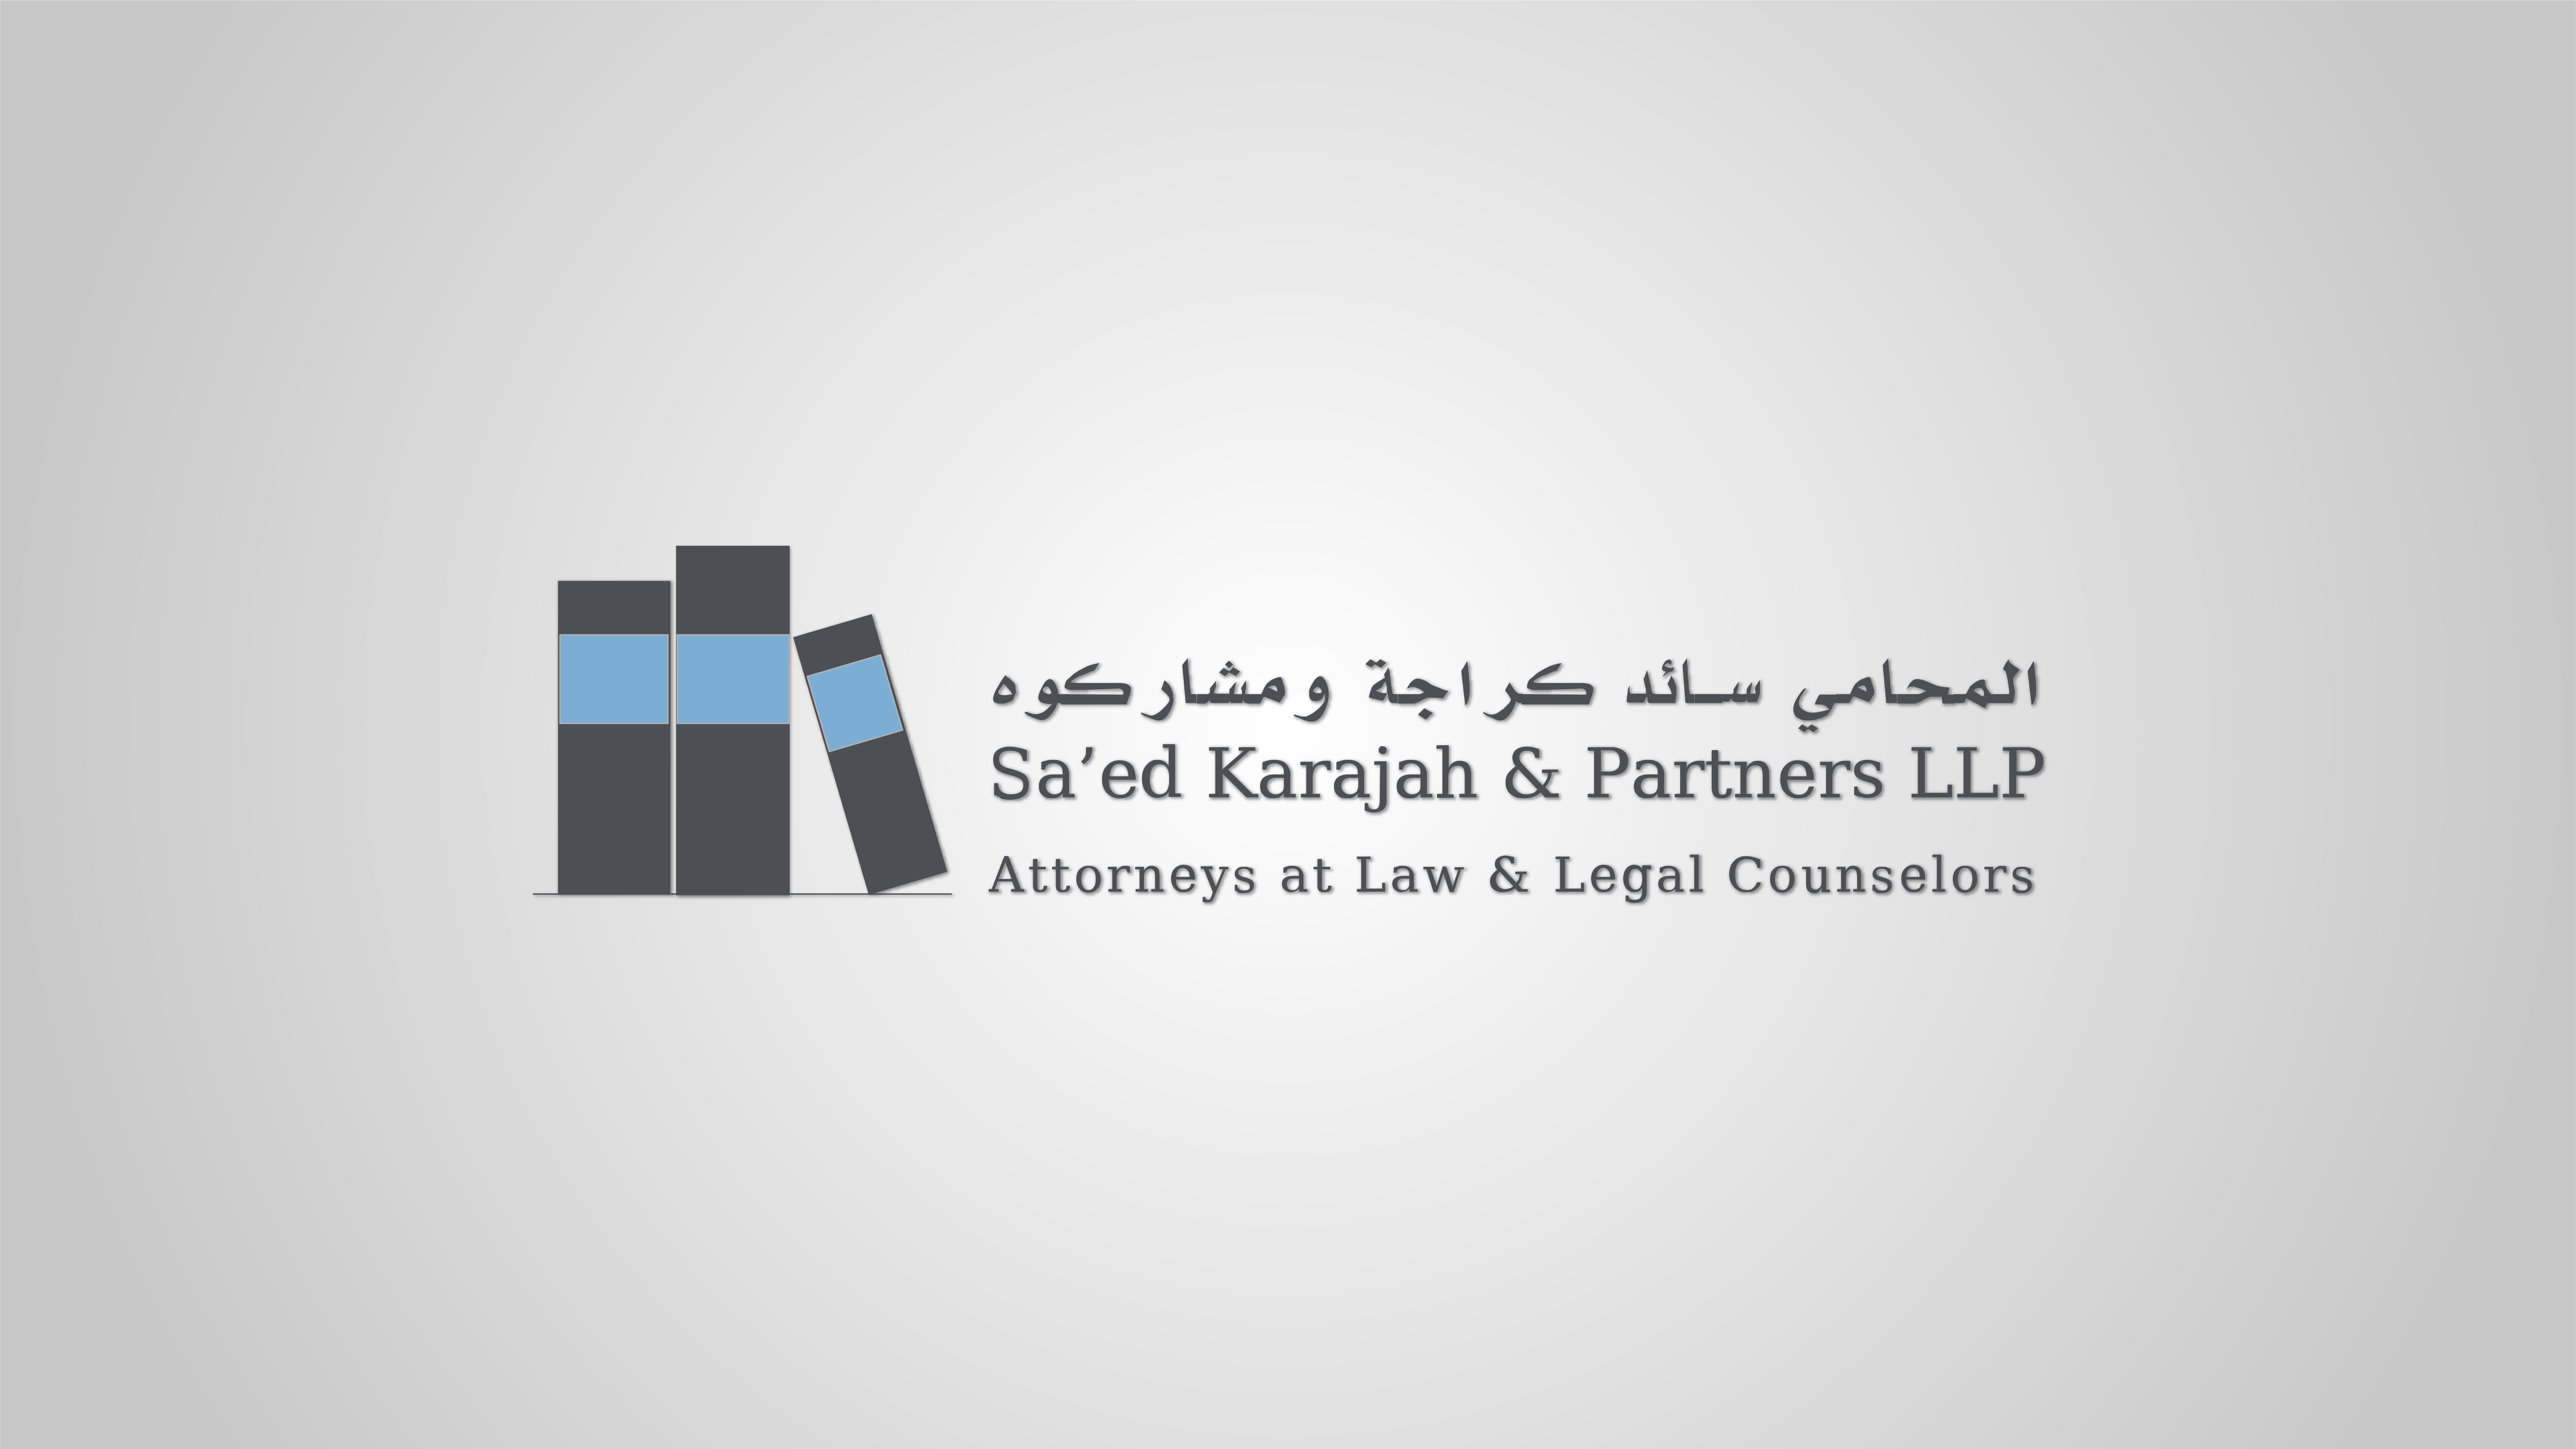 Saudi Arabia’s New Companies Law Skp